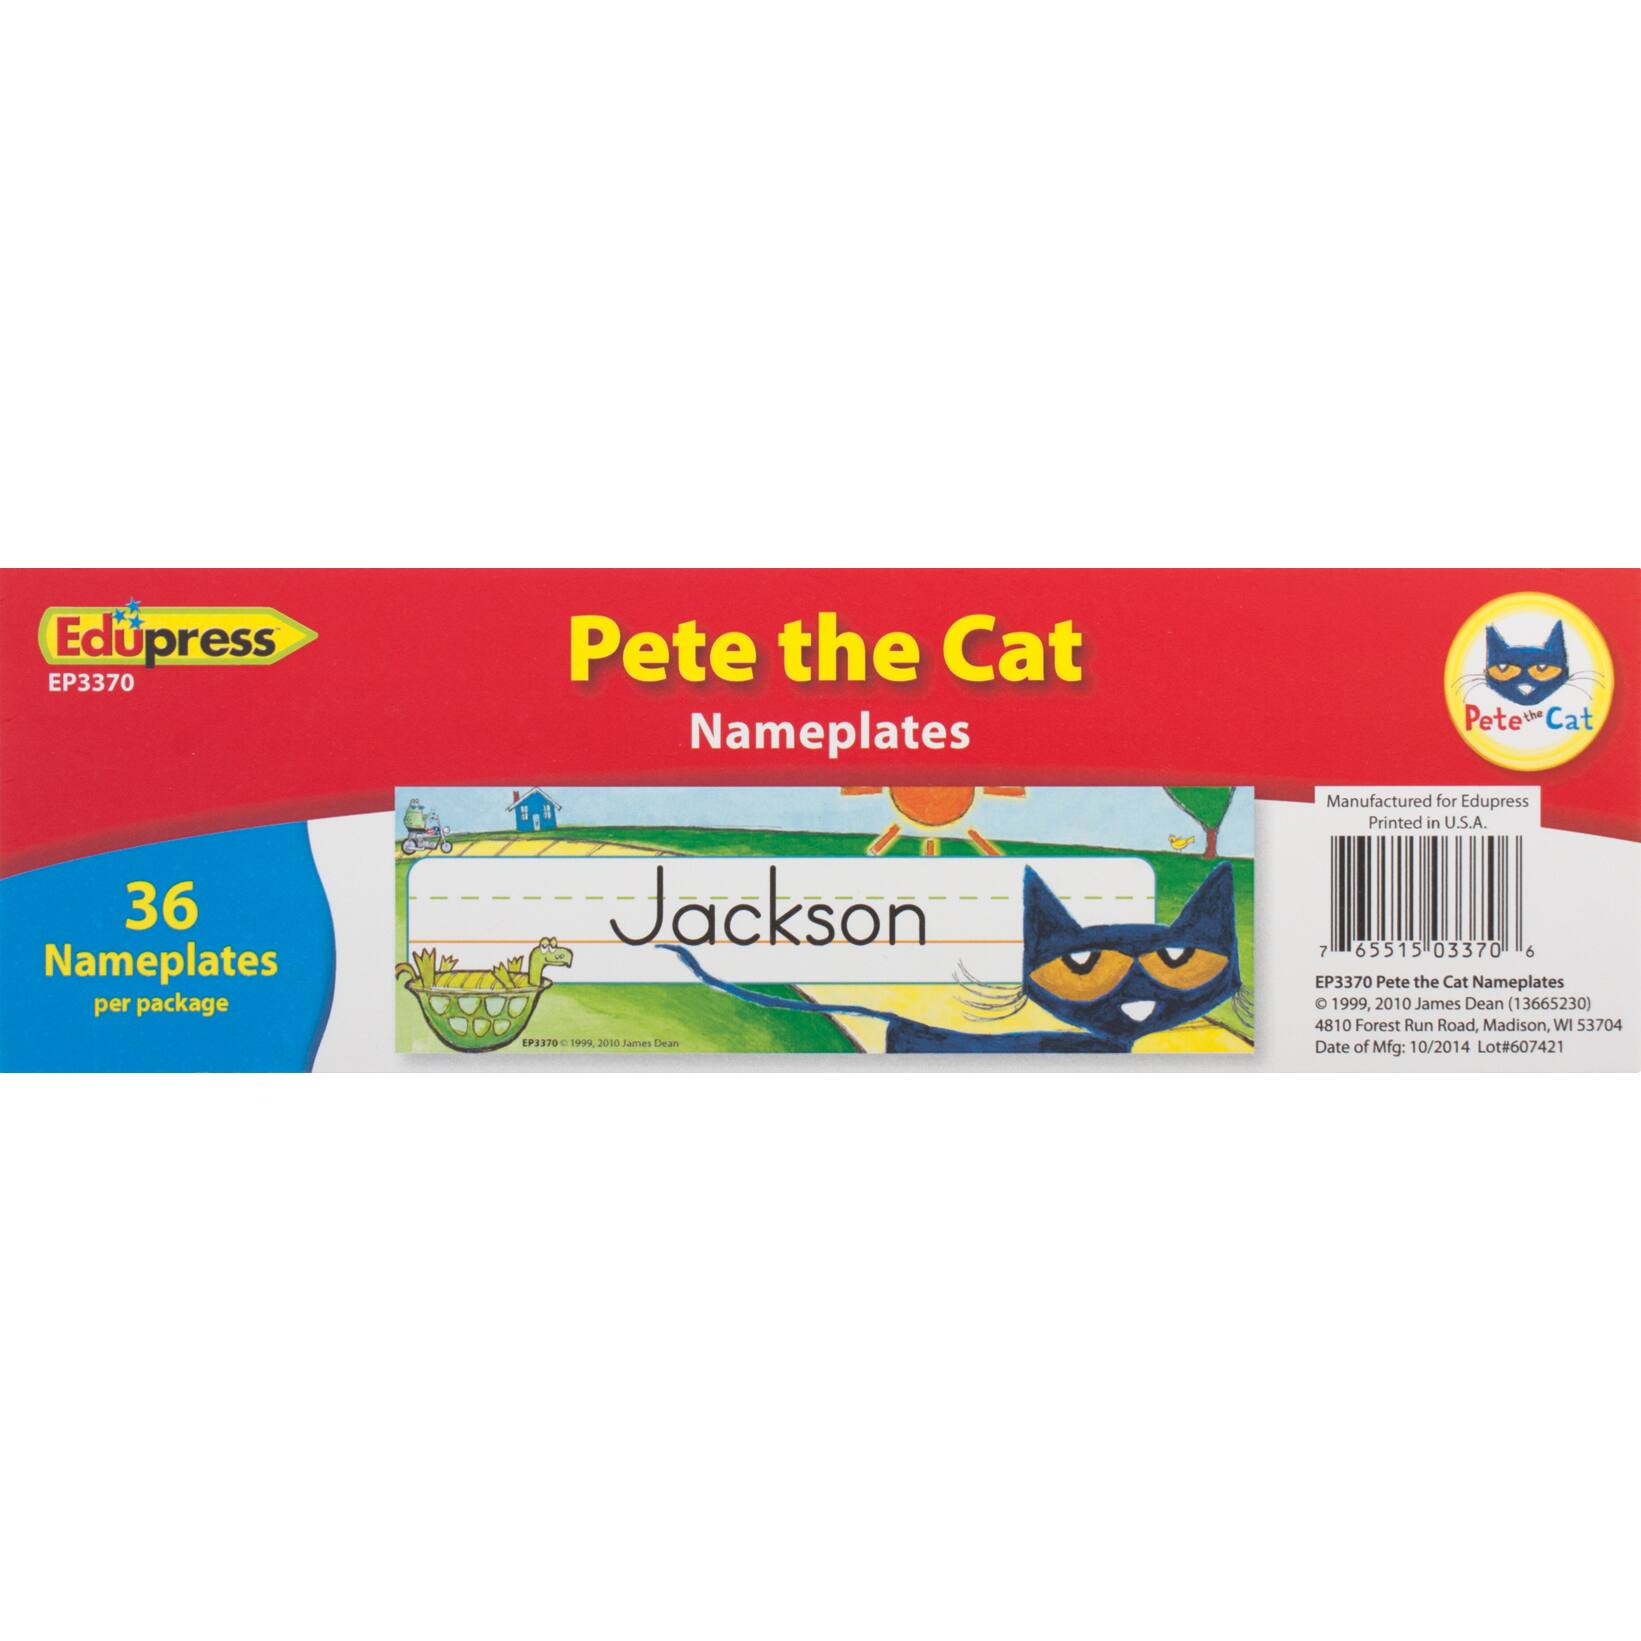 Pete the Cat Nameplates